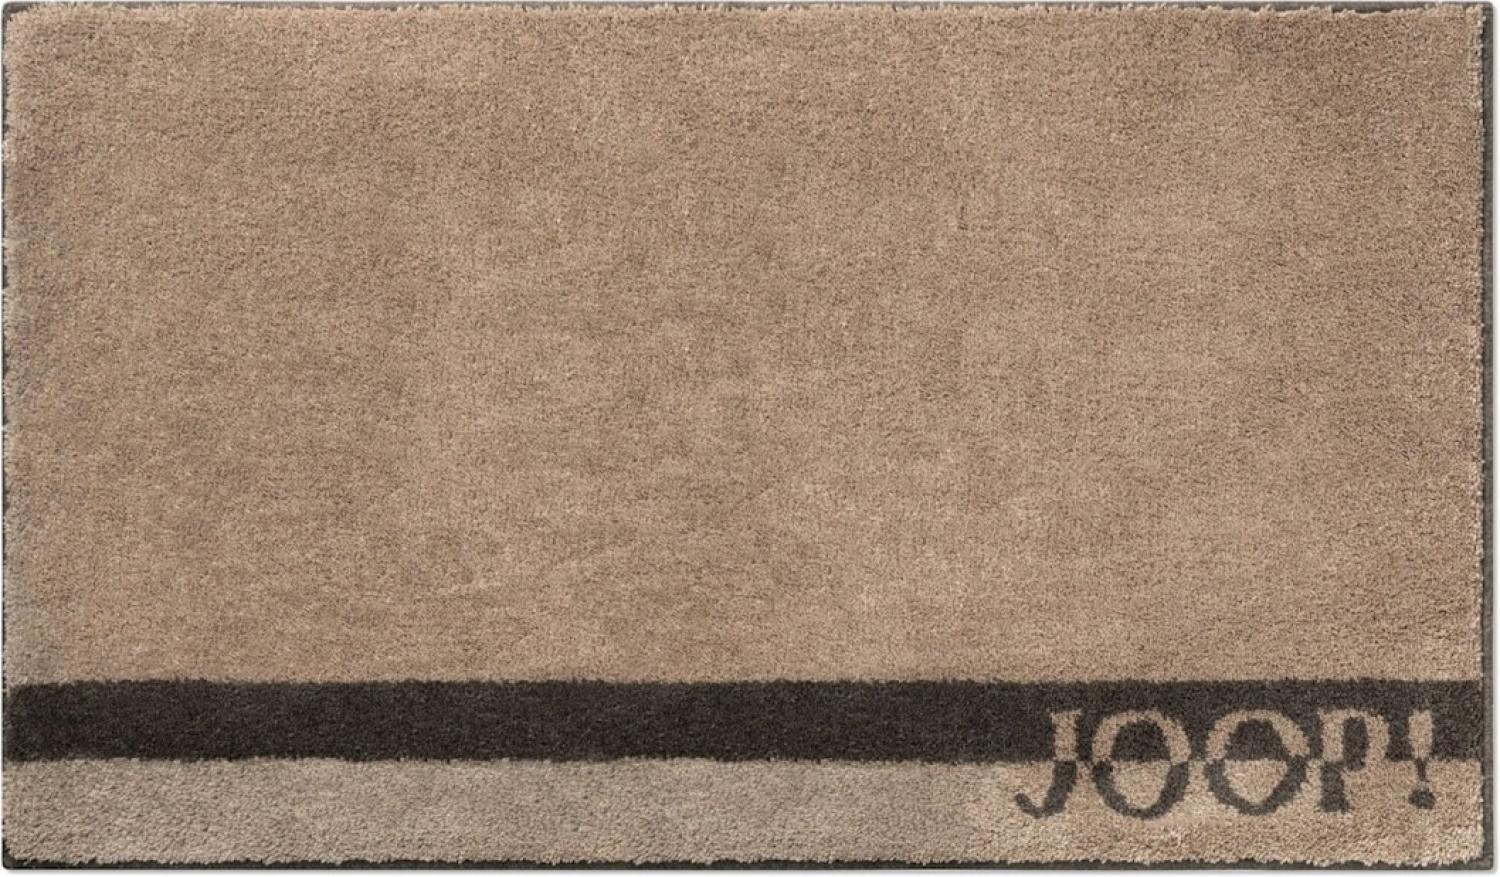 JOOP! Badteppich 141 LOGO STRIPES Sand 50 x 60 cm Bild 1